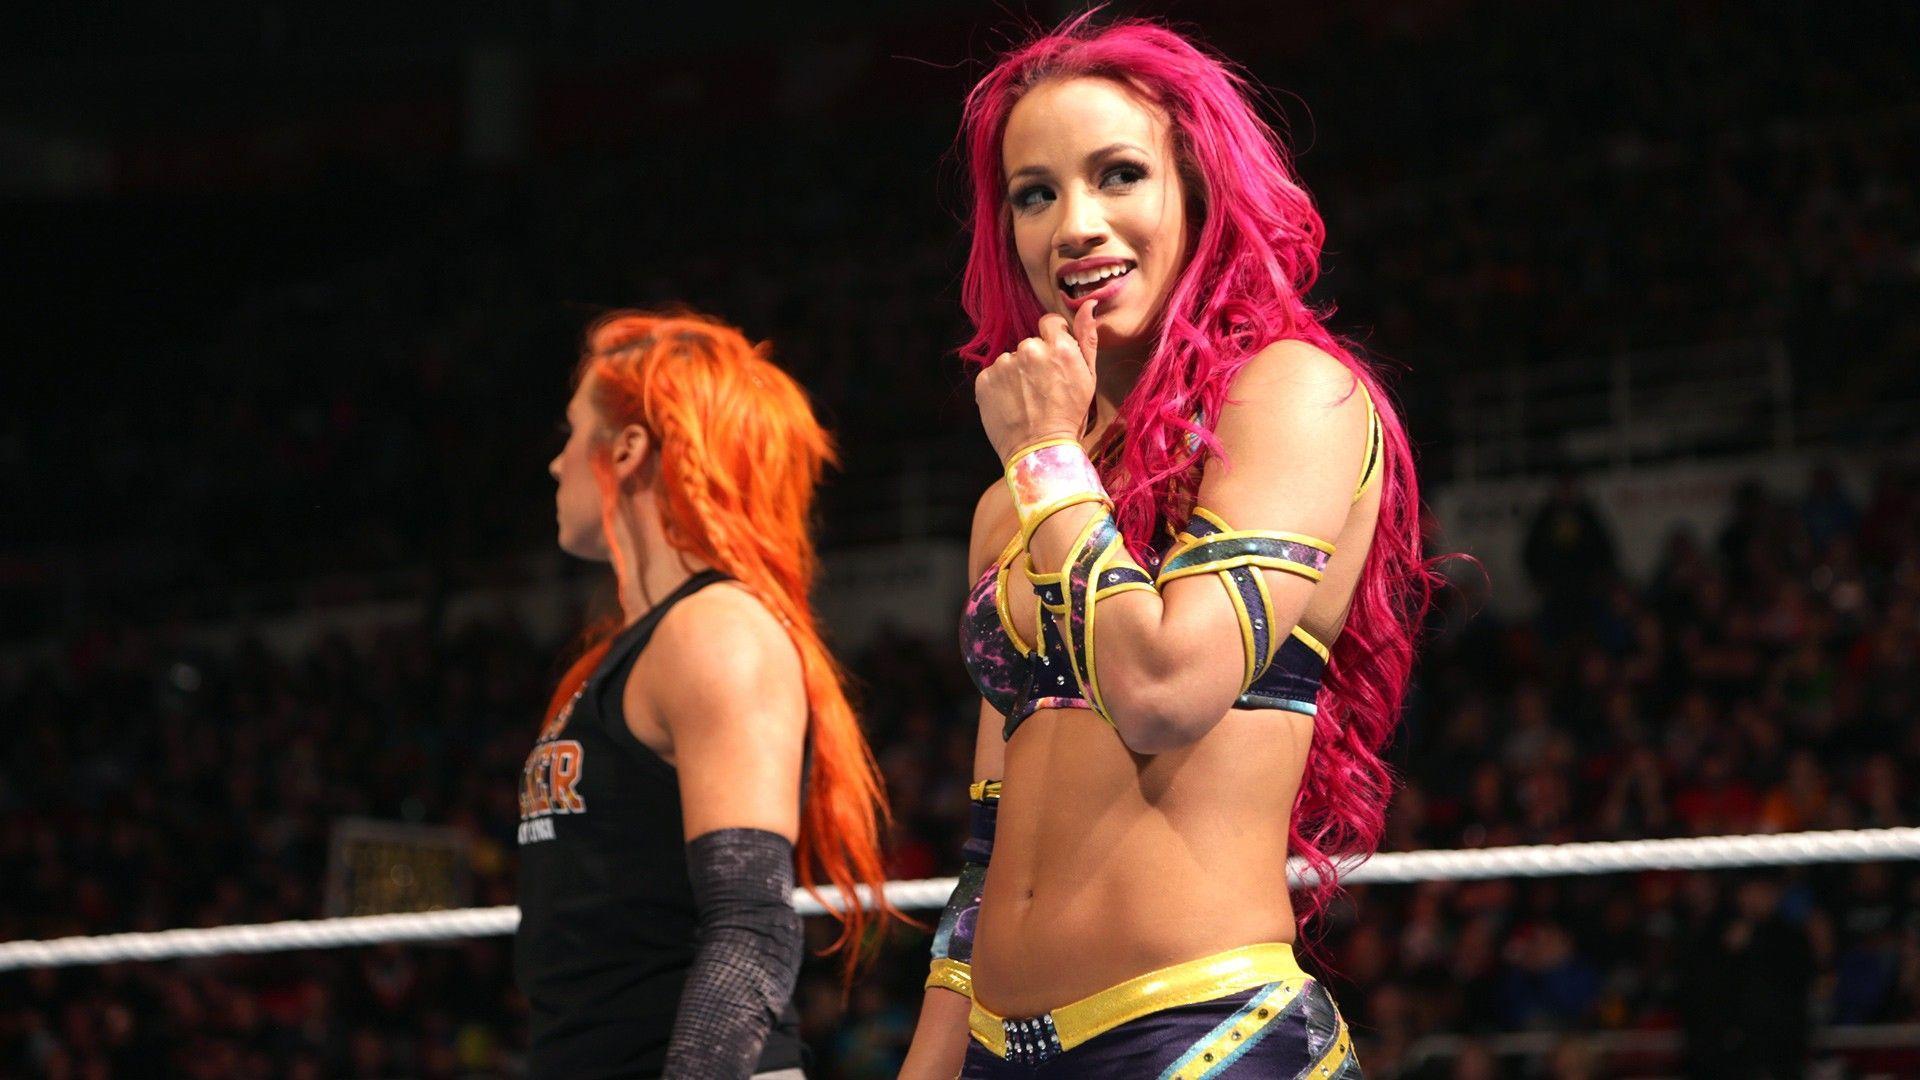 dyed hair, #purple hair, #Becky Lynch, #WWE, #wrestling, #Sasha